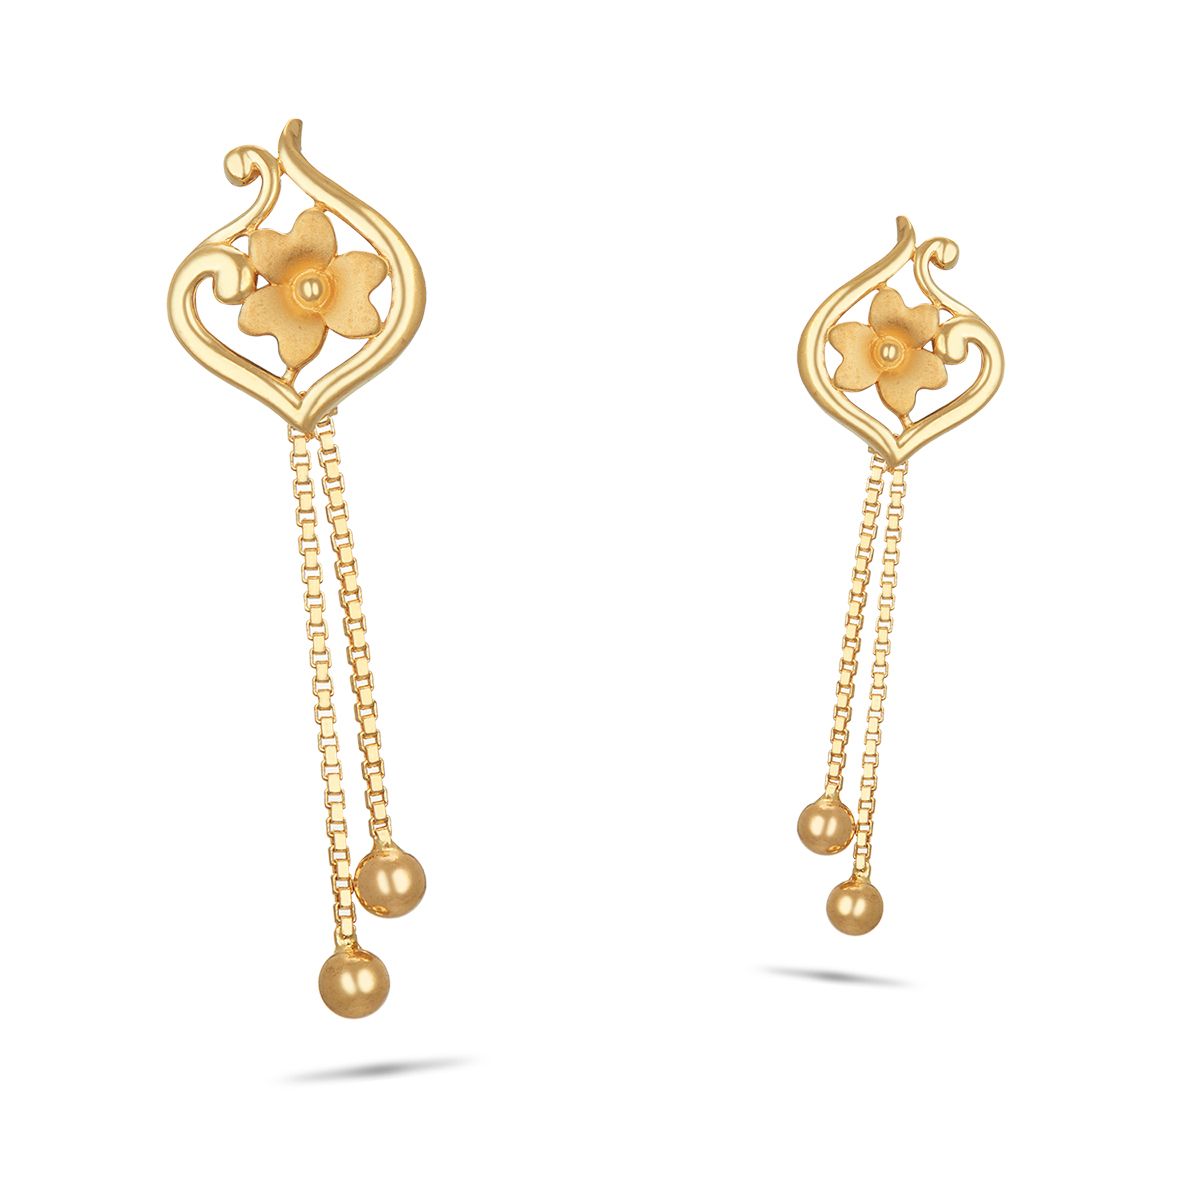 Buy Rose Gold Blooming Flower Earrings for Women Online in India